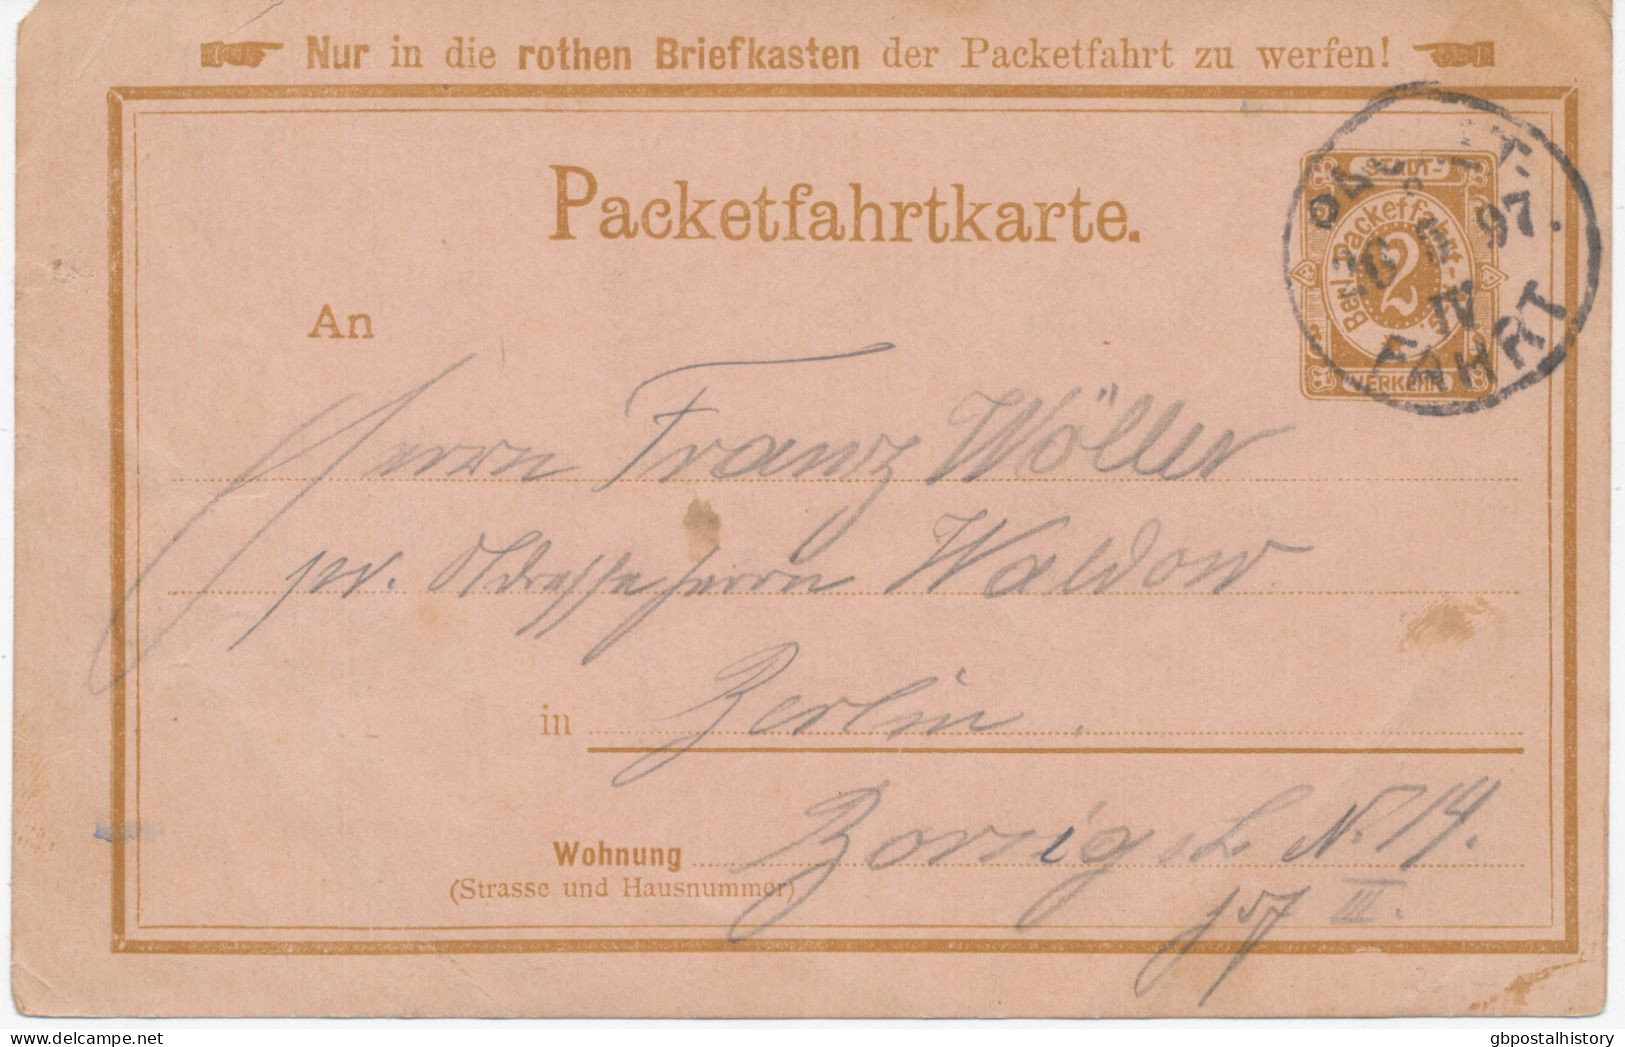 BERLIN 1897 BERLIN Packetfahrtkarte 2 Pf GA-Postkarte Der Beliner Packertfahrt AG Mit K1 „PACKET-FAHRT“, Selten - Cartoline Private - Usati